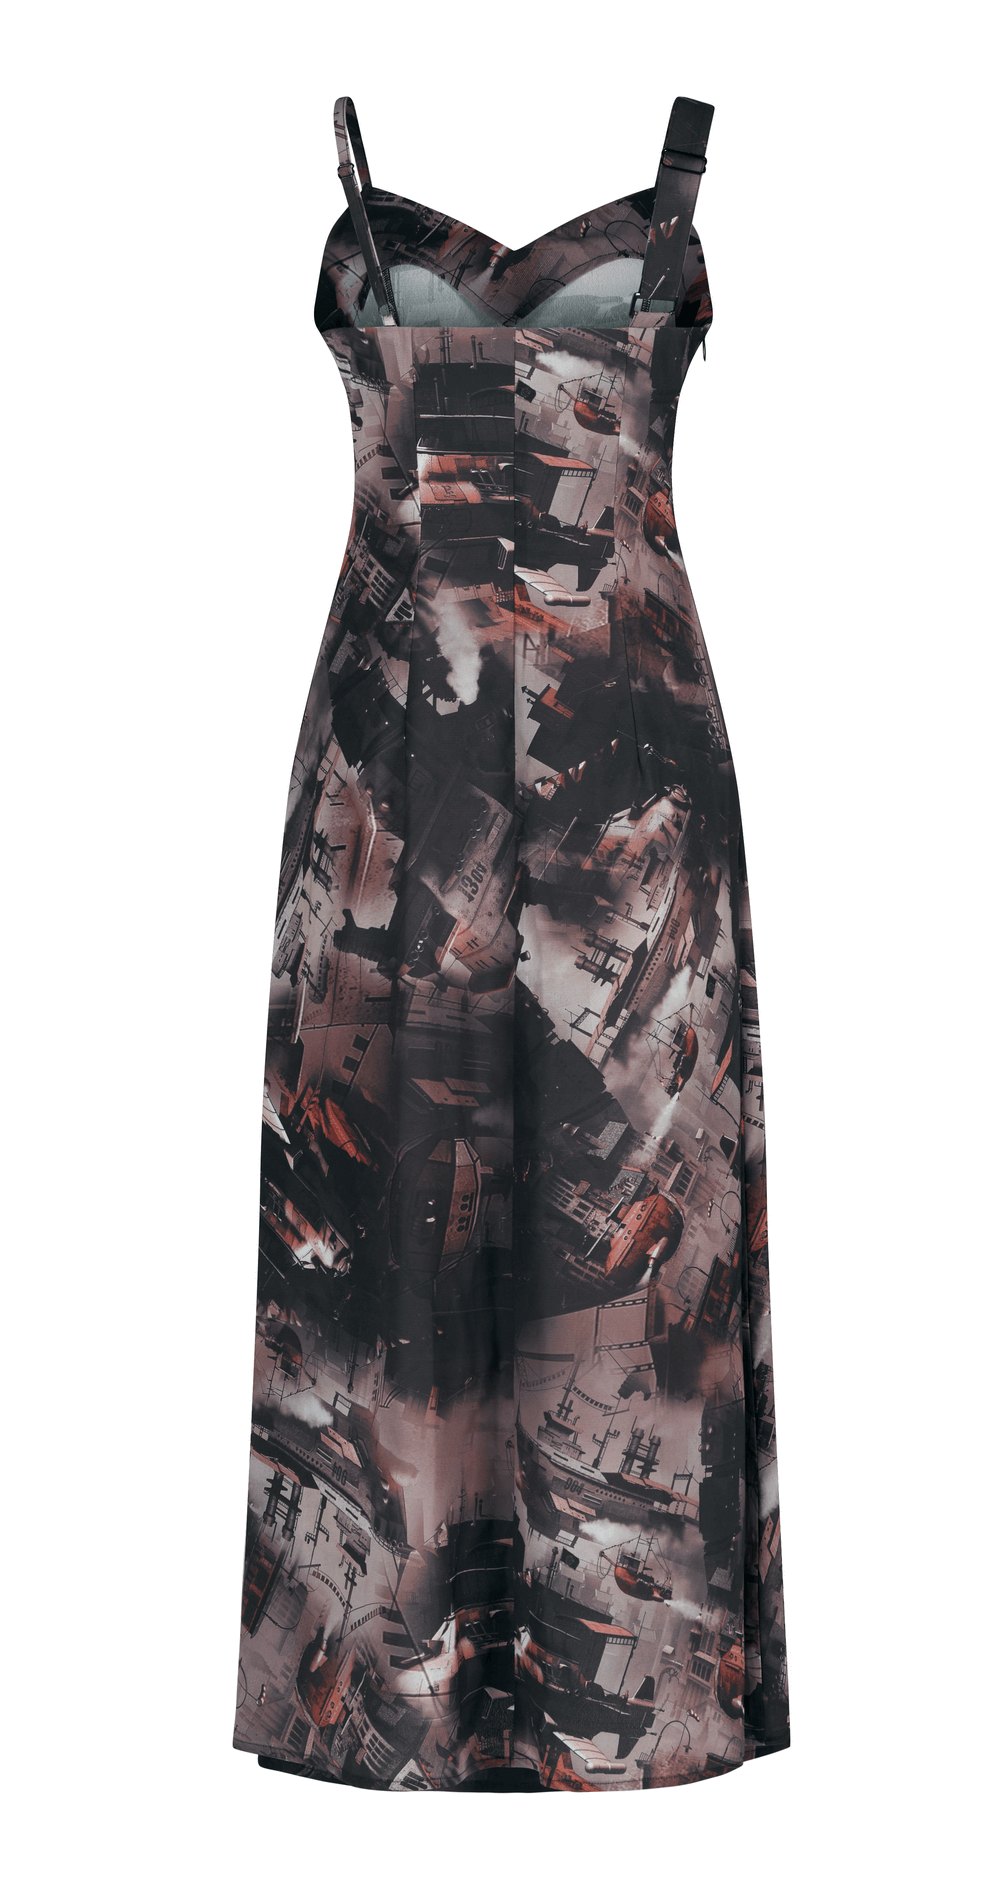 Urban Decay Print Midi Dress with Metal Accents